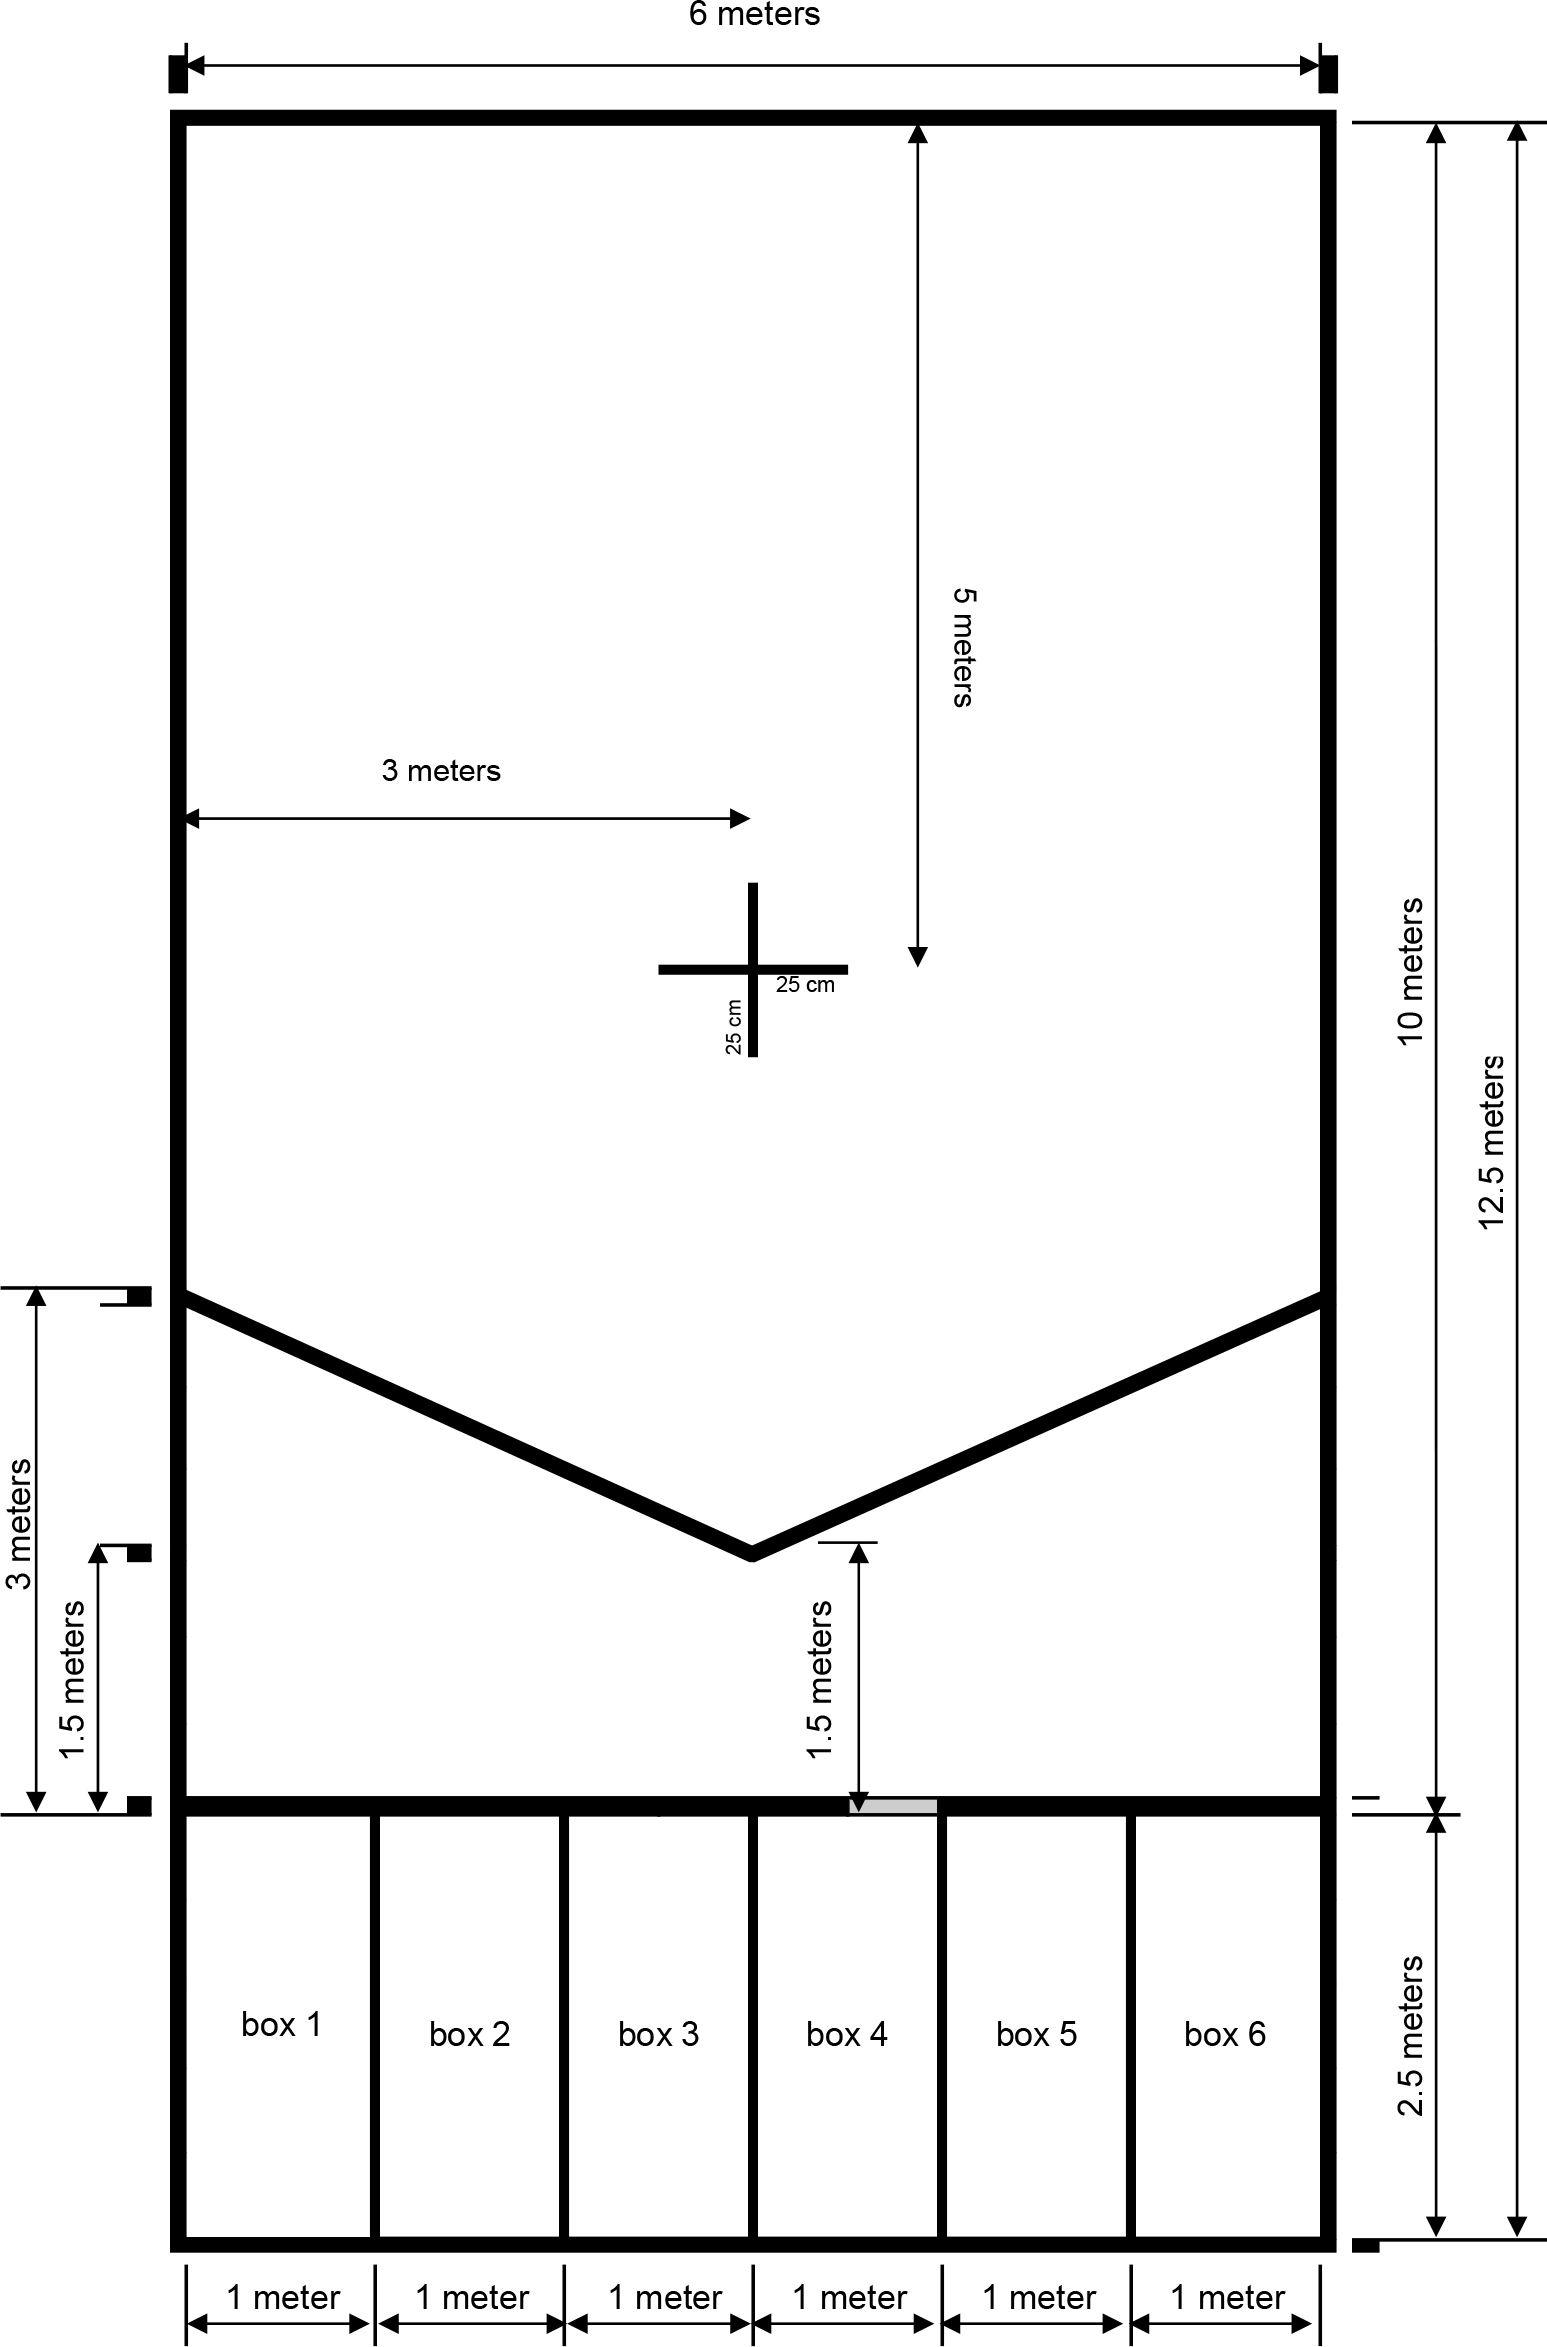 boccia-court-layout